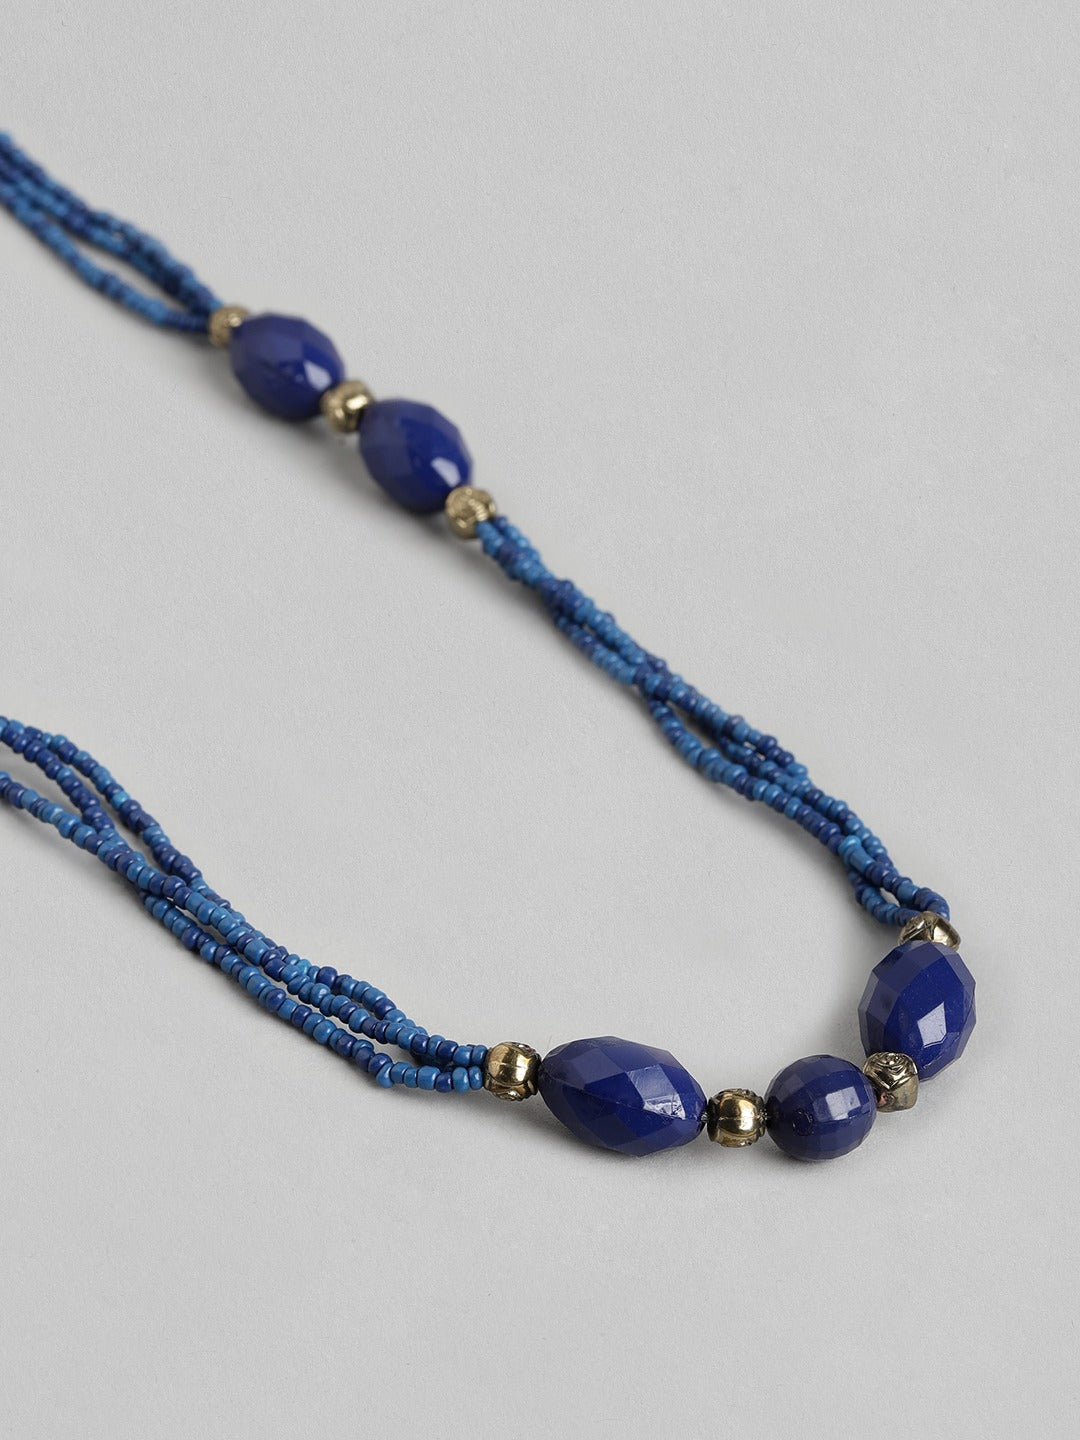 RICHEERA Blue Artificial Beads Necklace